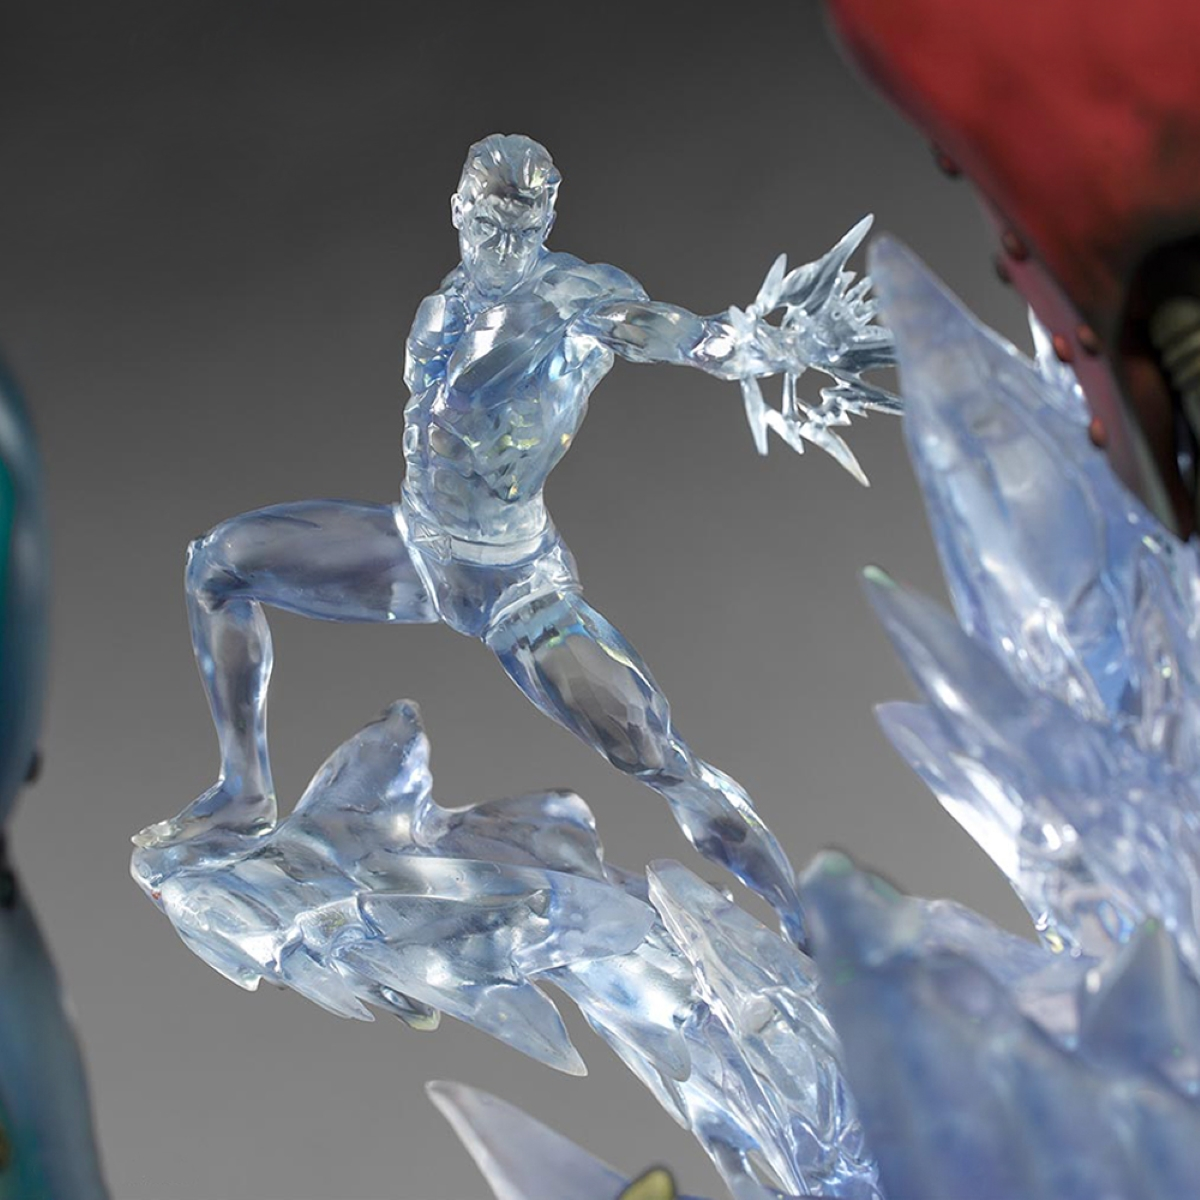 IRON STUDIOS vs. Deluxe X-Men Sammelfigur 1/10 Statue Sentinel